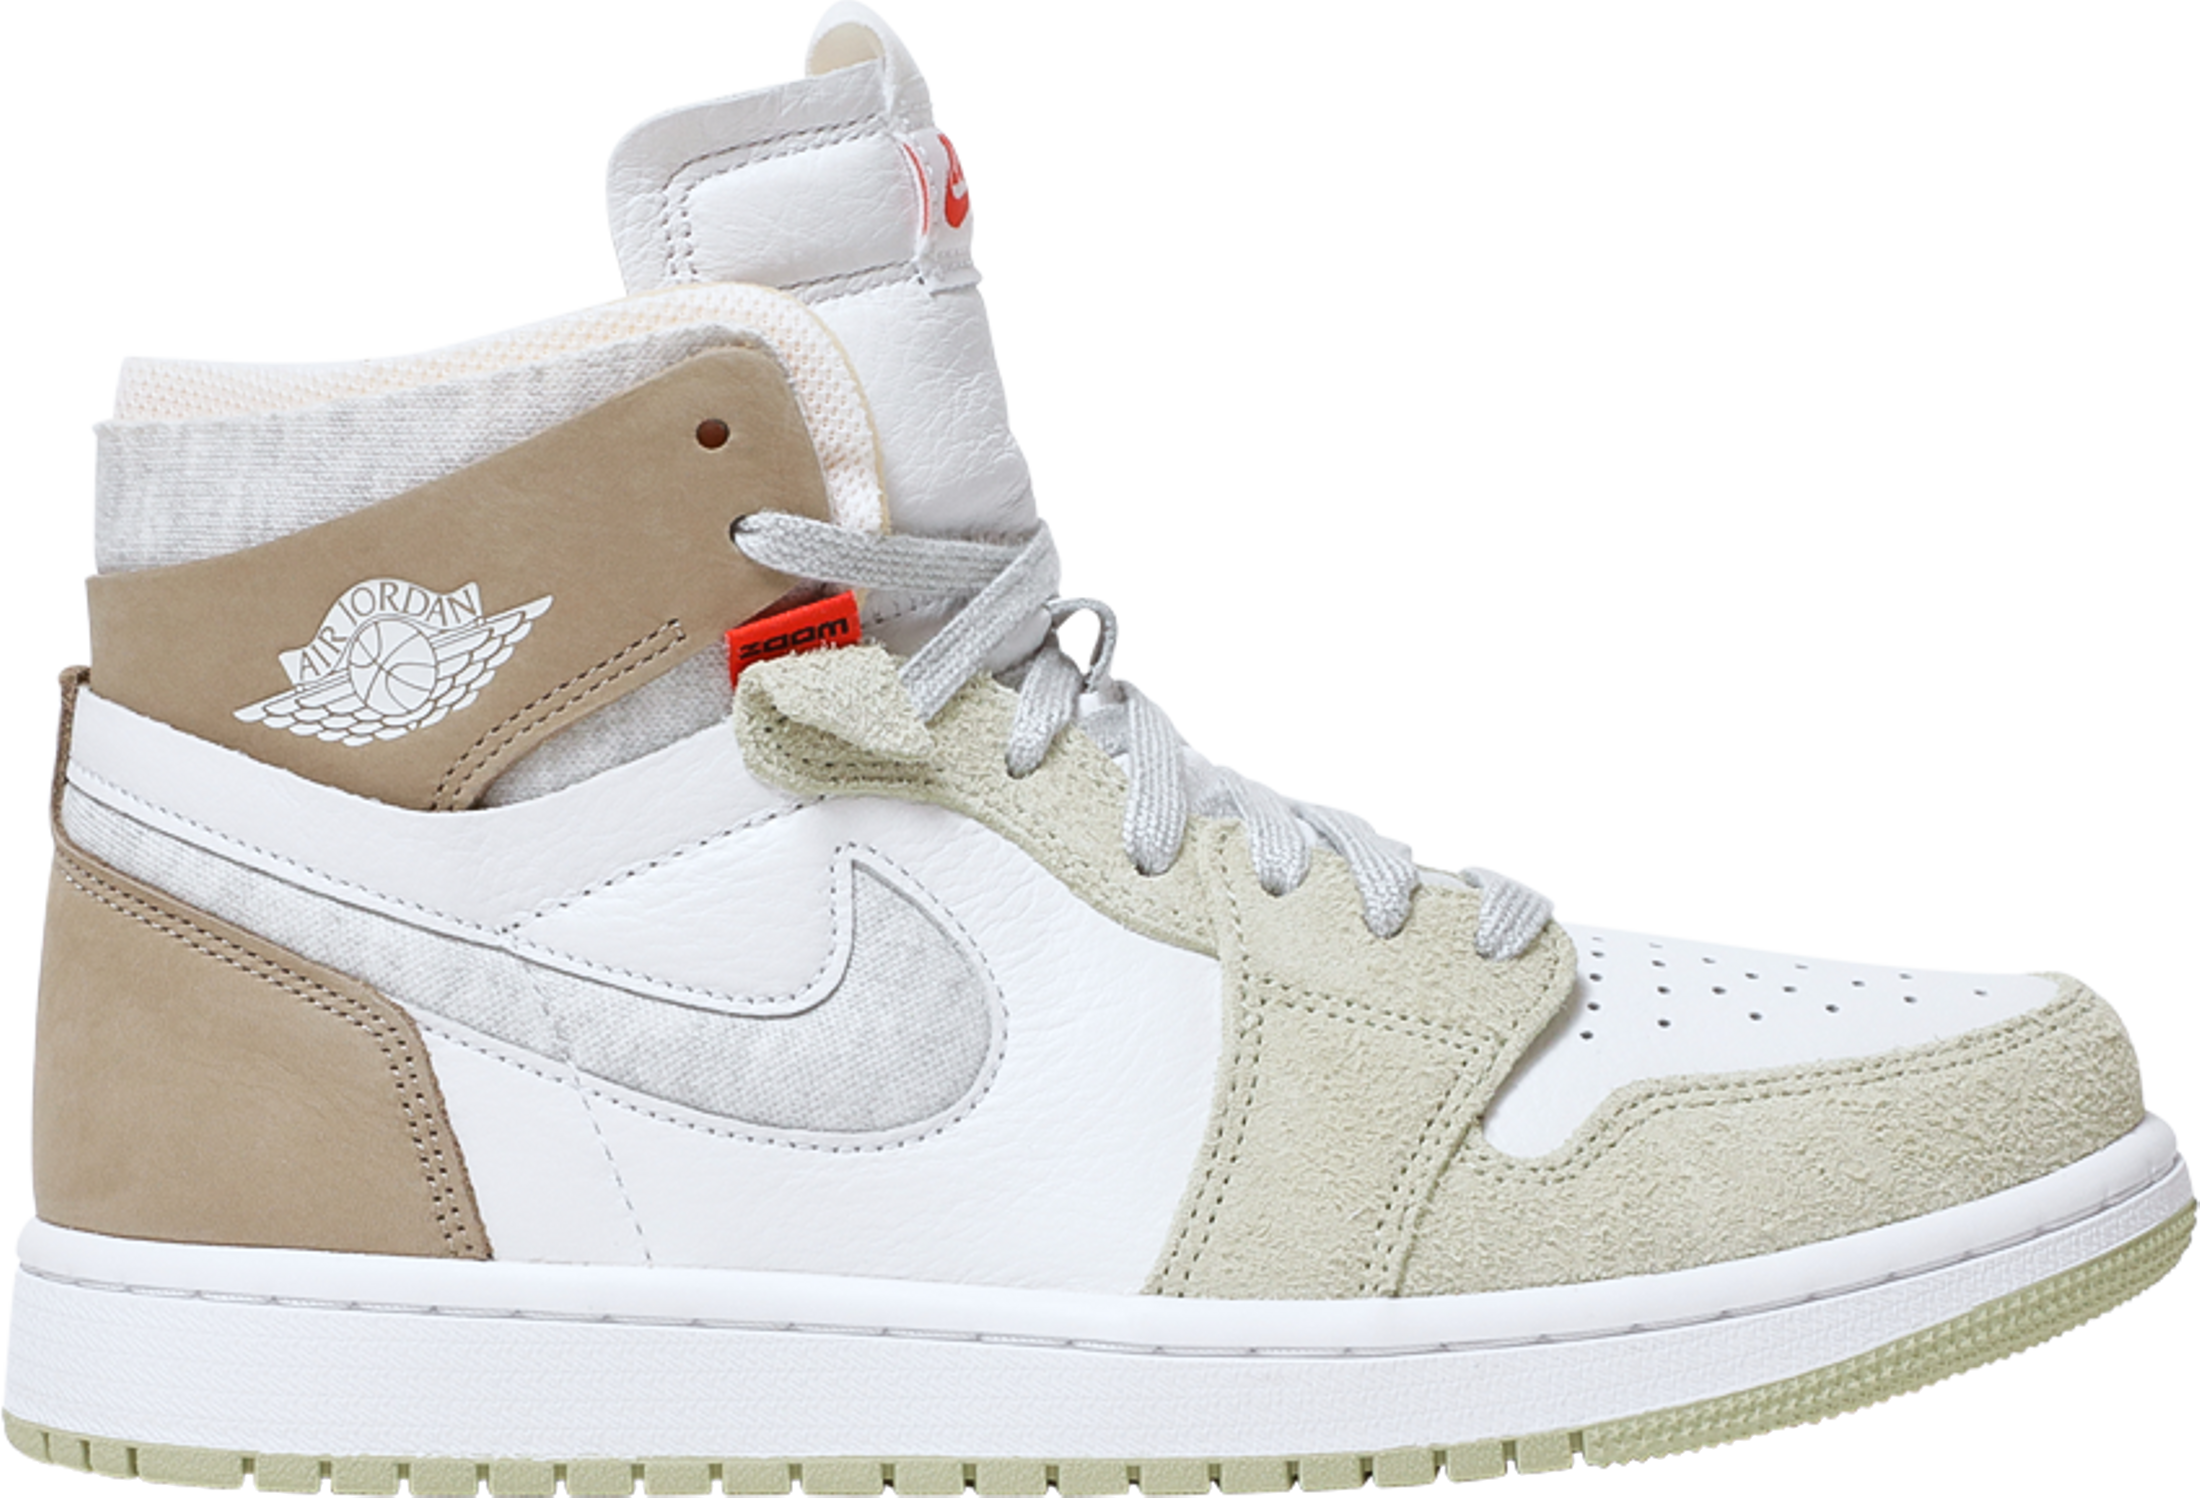 Air Jordan Wmns 1 High Zoom Comfort Sneaker in Olive Aura - CT0979 102